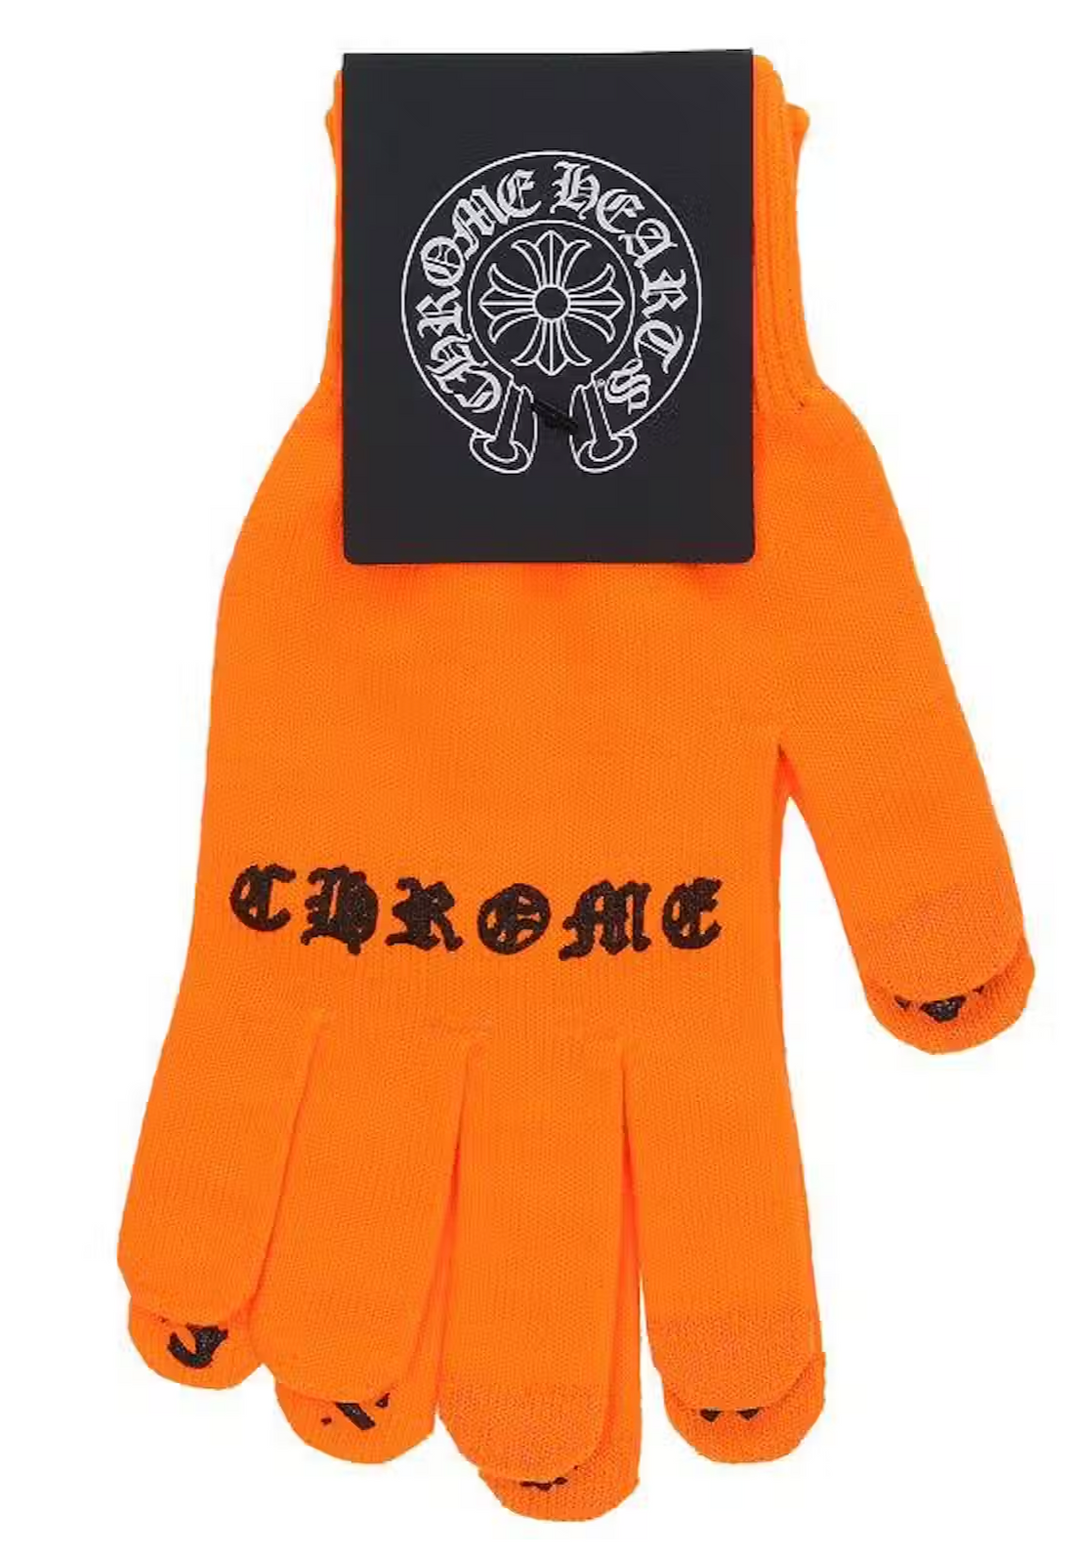 Chrome Hearts 'Work' Gloves Orange